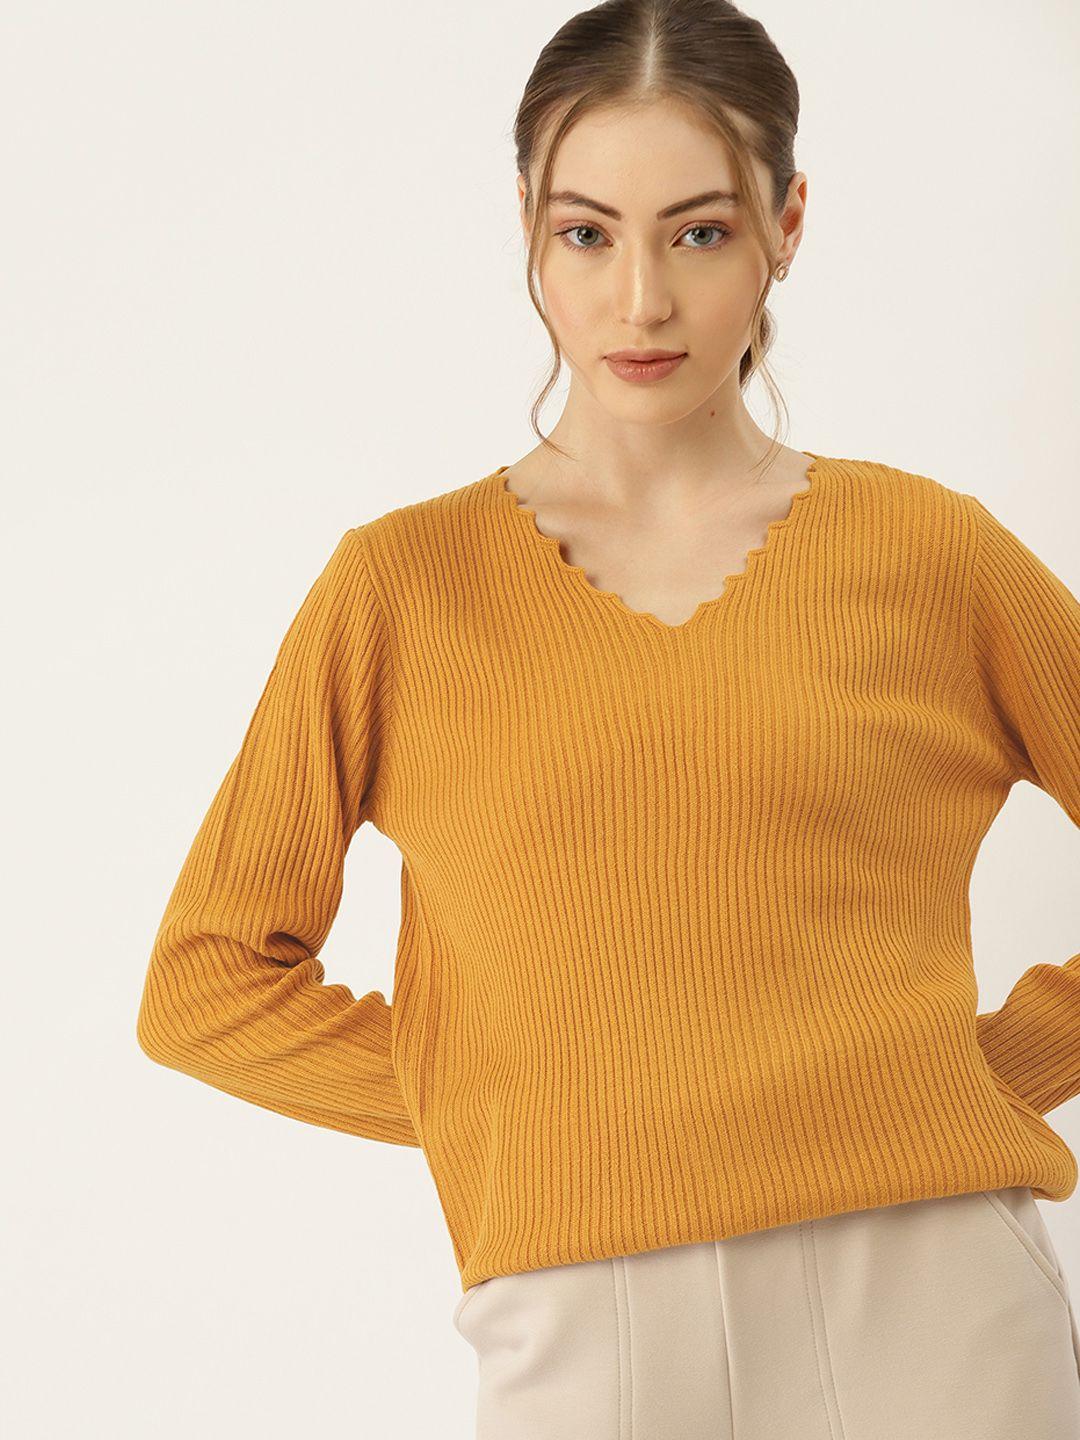 dressberry women mustard yellow self striped acrylic pullover sweater